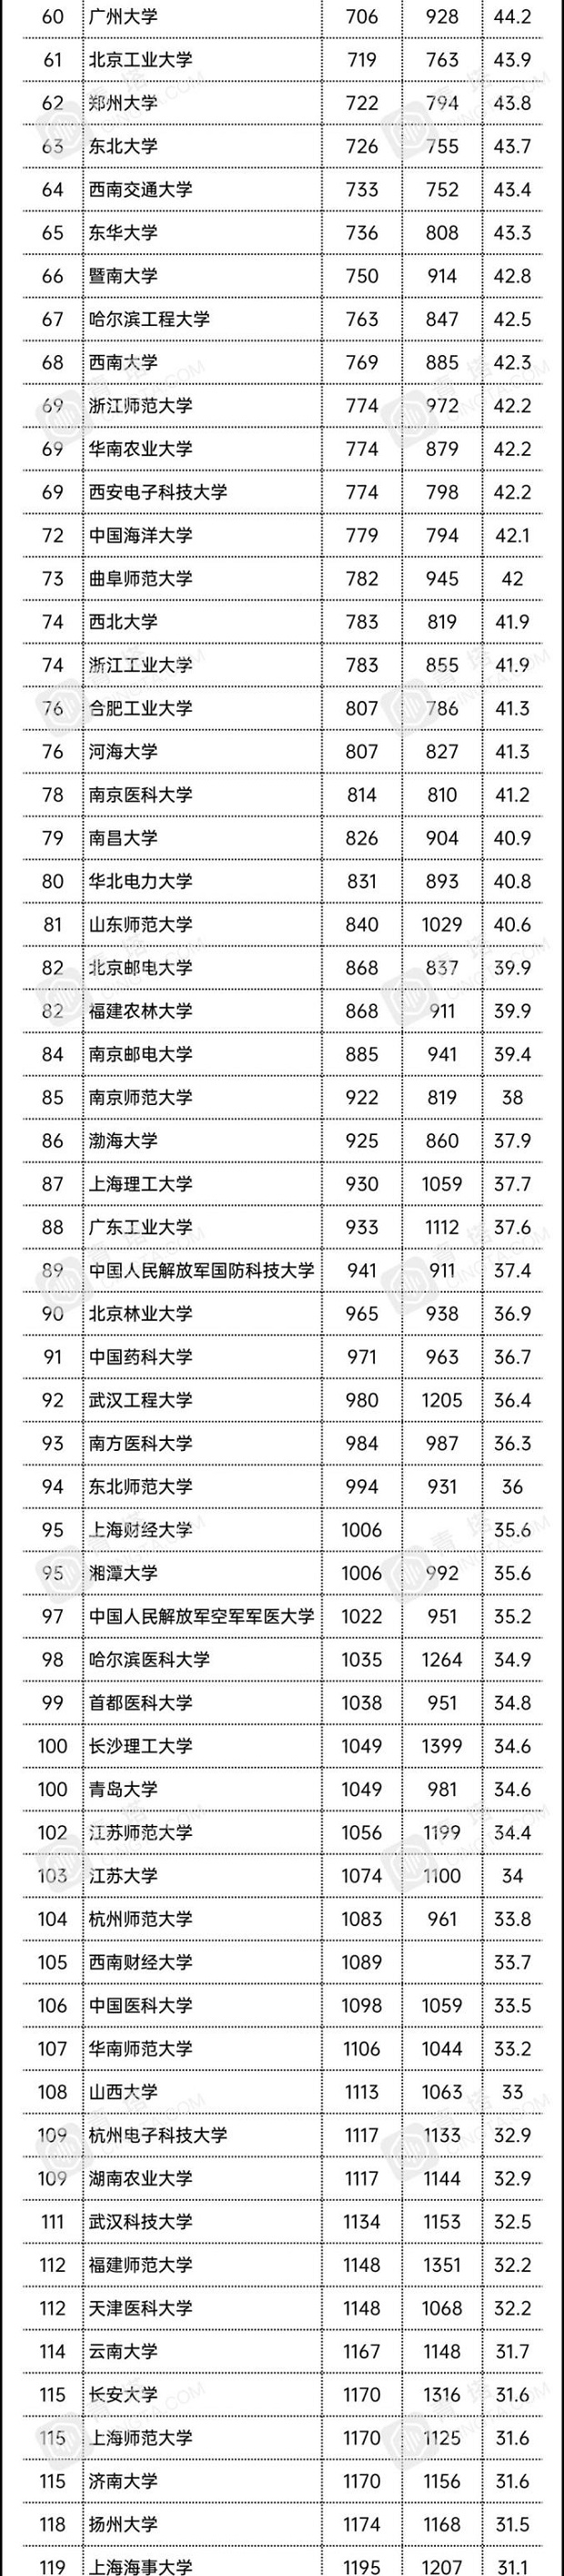 usnews2021中国大学排名